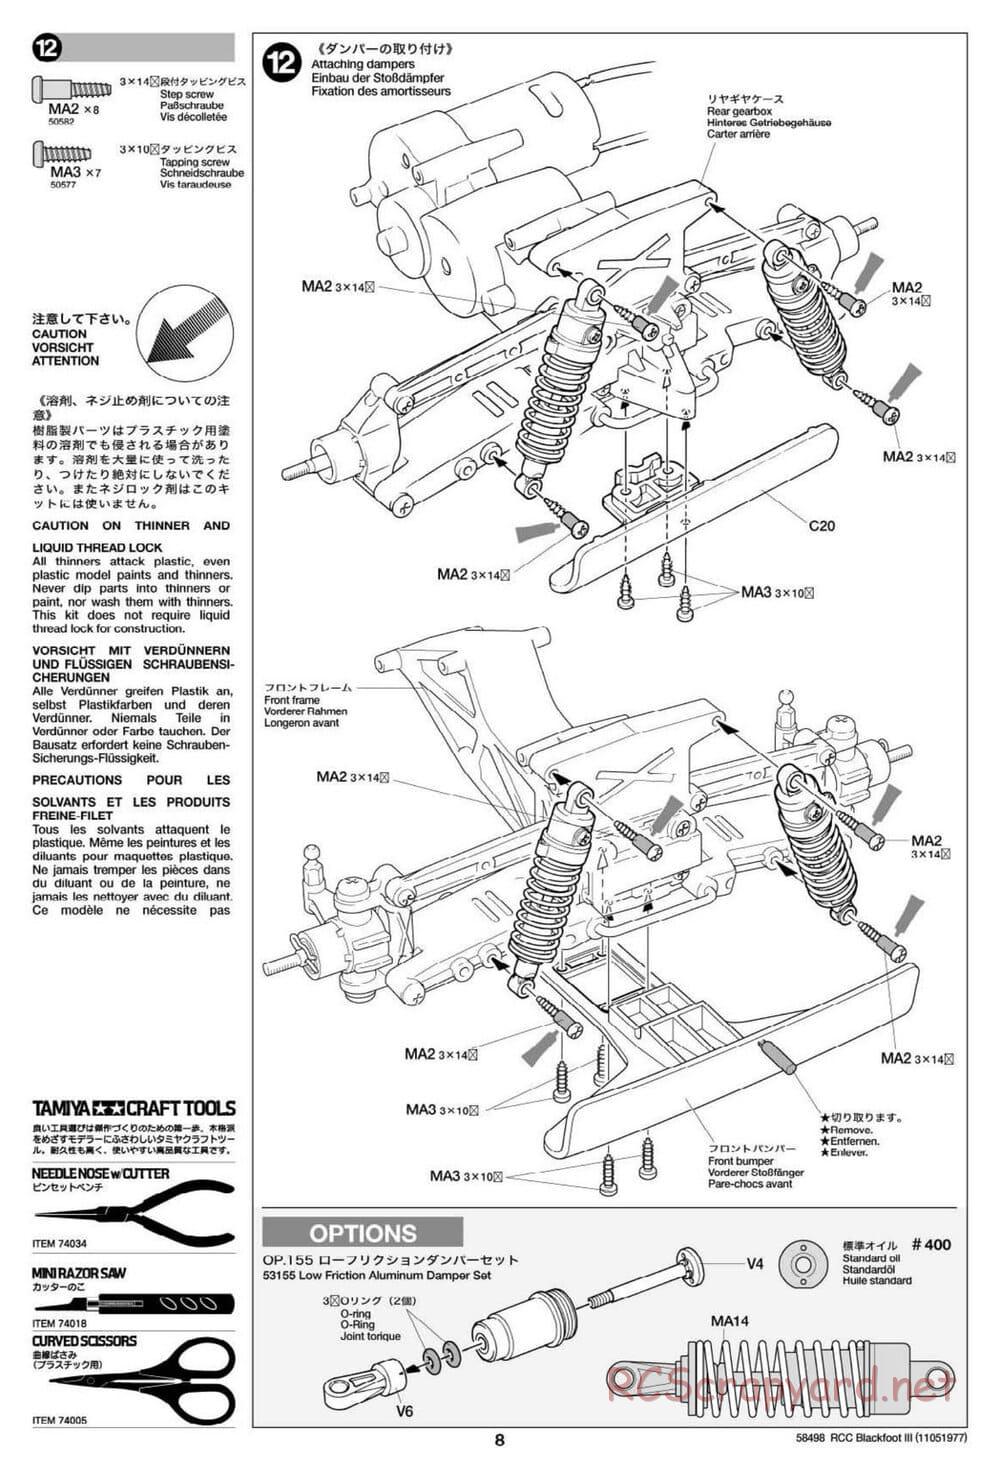 Tamiya - Blackfoot III - WT-01 Chassis - Manual - Page 8